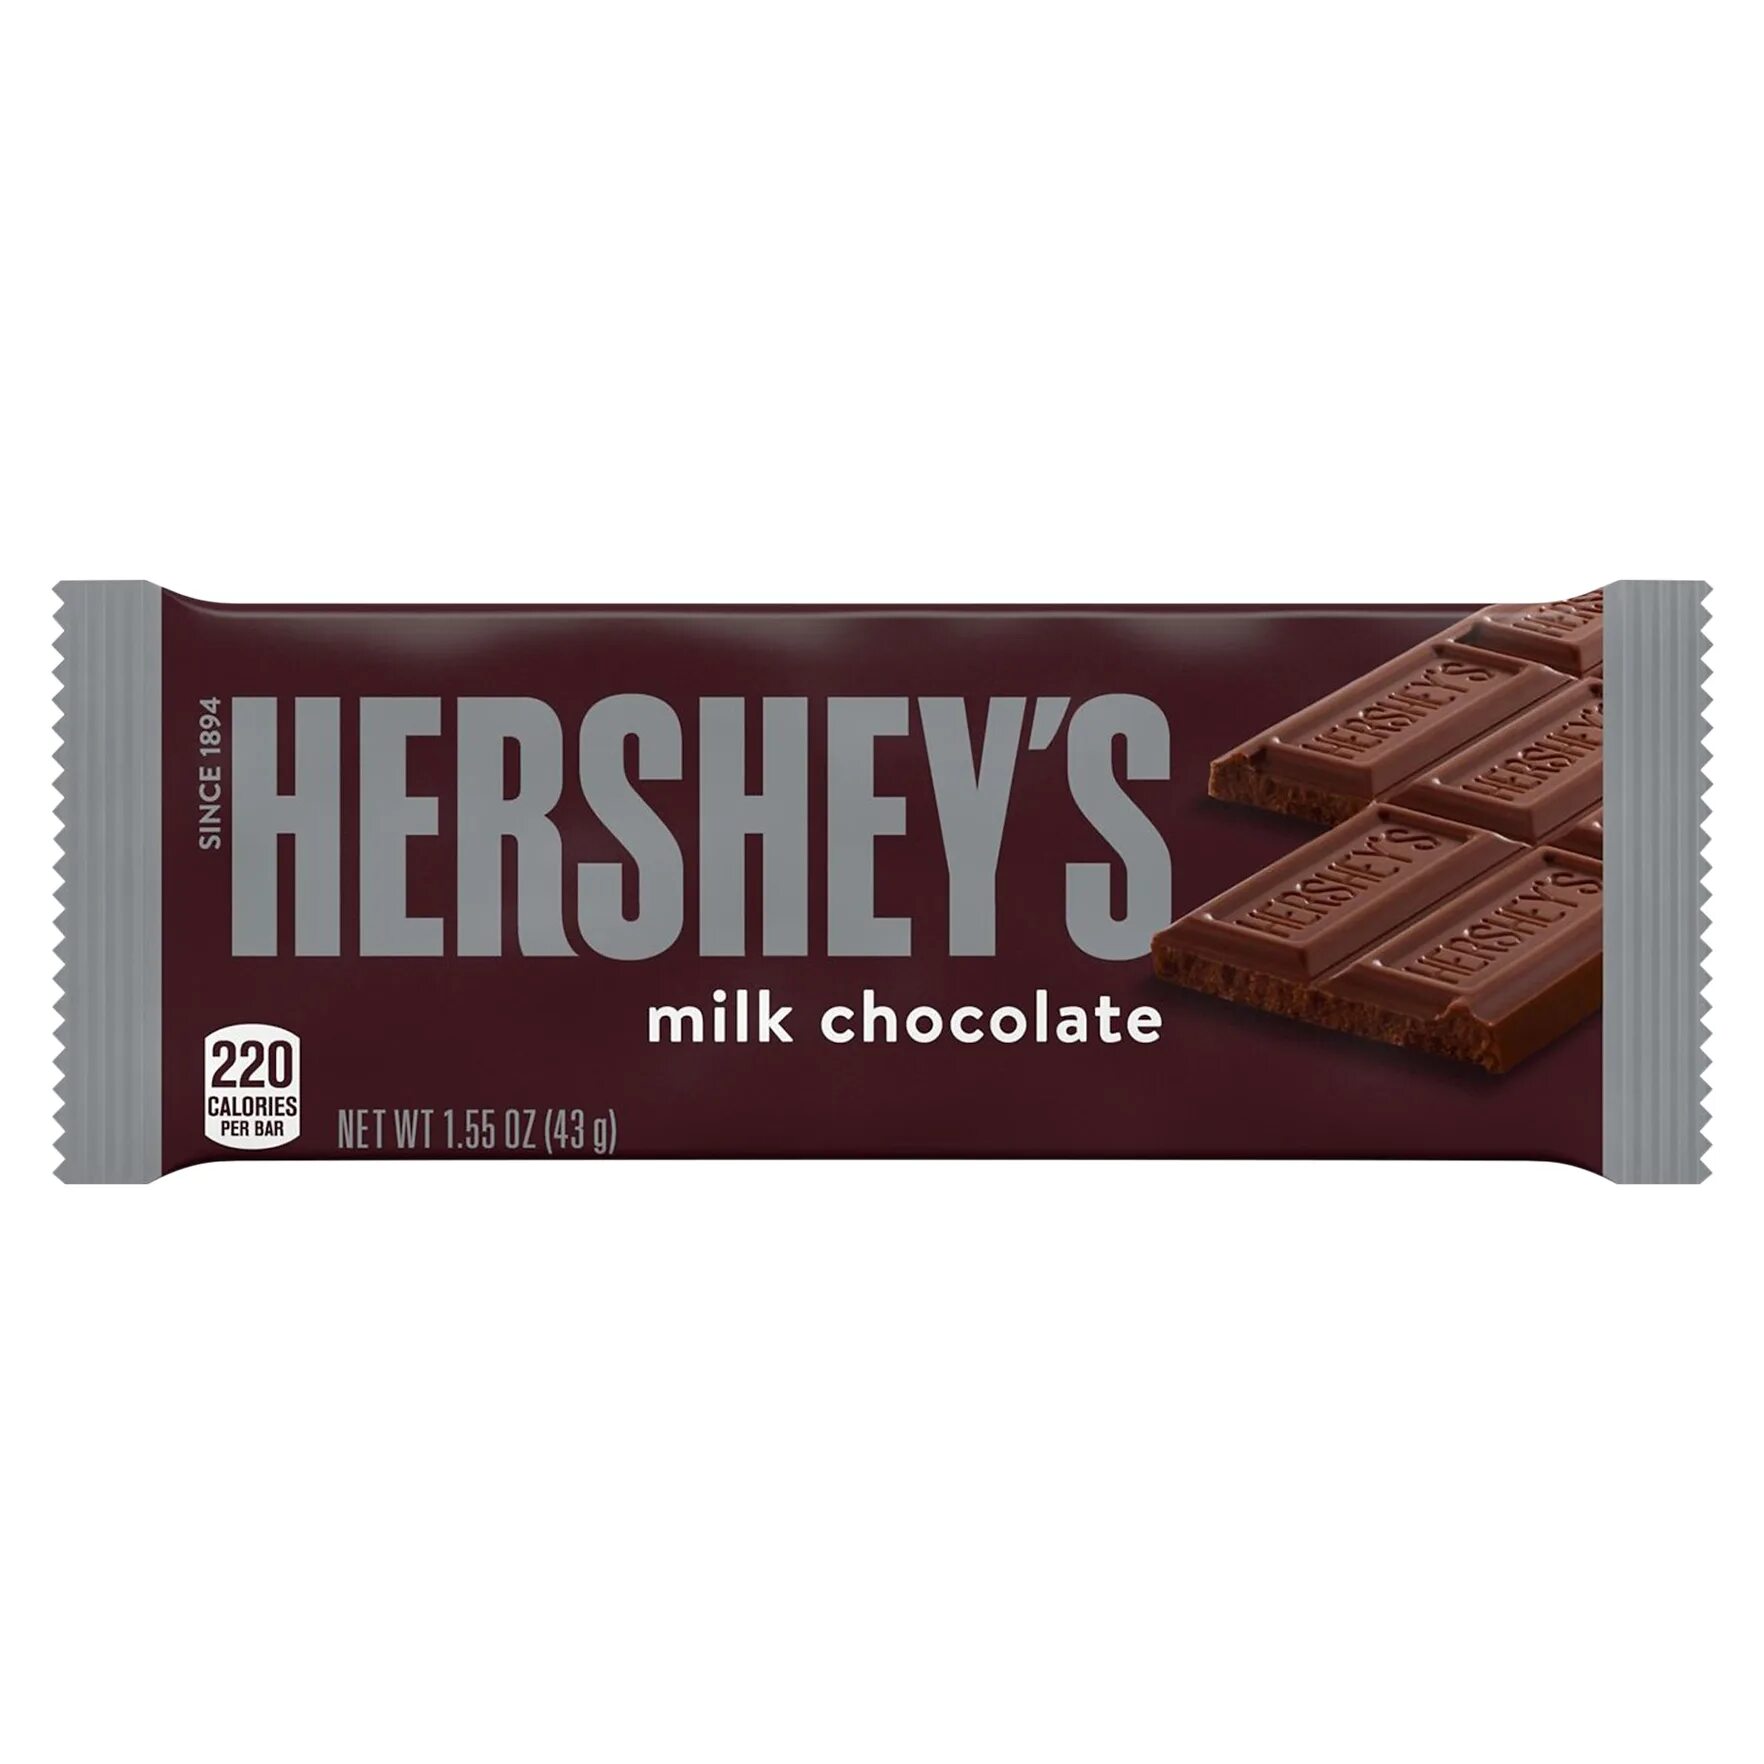 Hershey's шоколад батончик. Шоколад американский Хершес. Шоколадный батончик Херши. Американская шоколадка Hershey's.